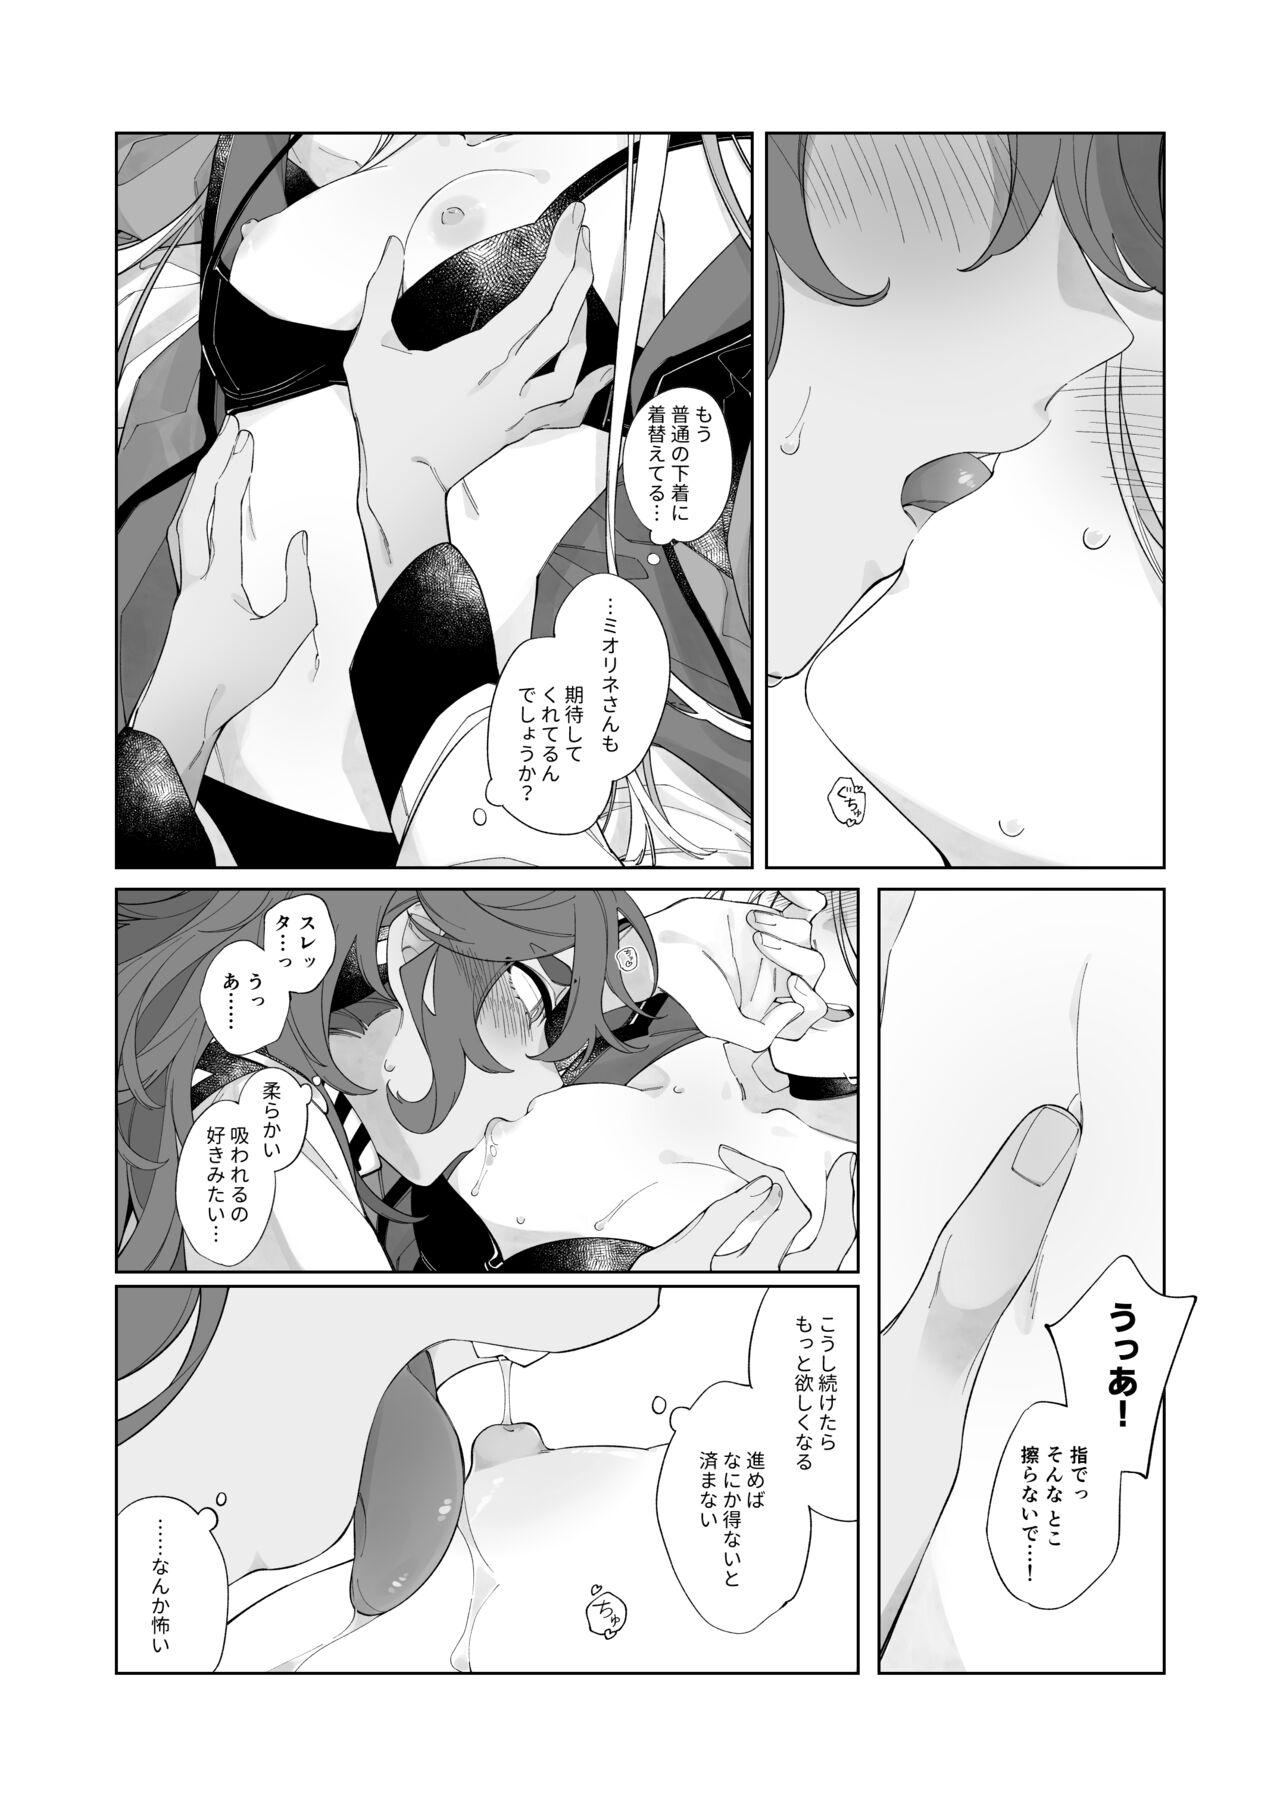 Kiss no Ato Nani ga Shitai? - After kissing, what else do you want to do? 19